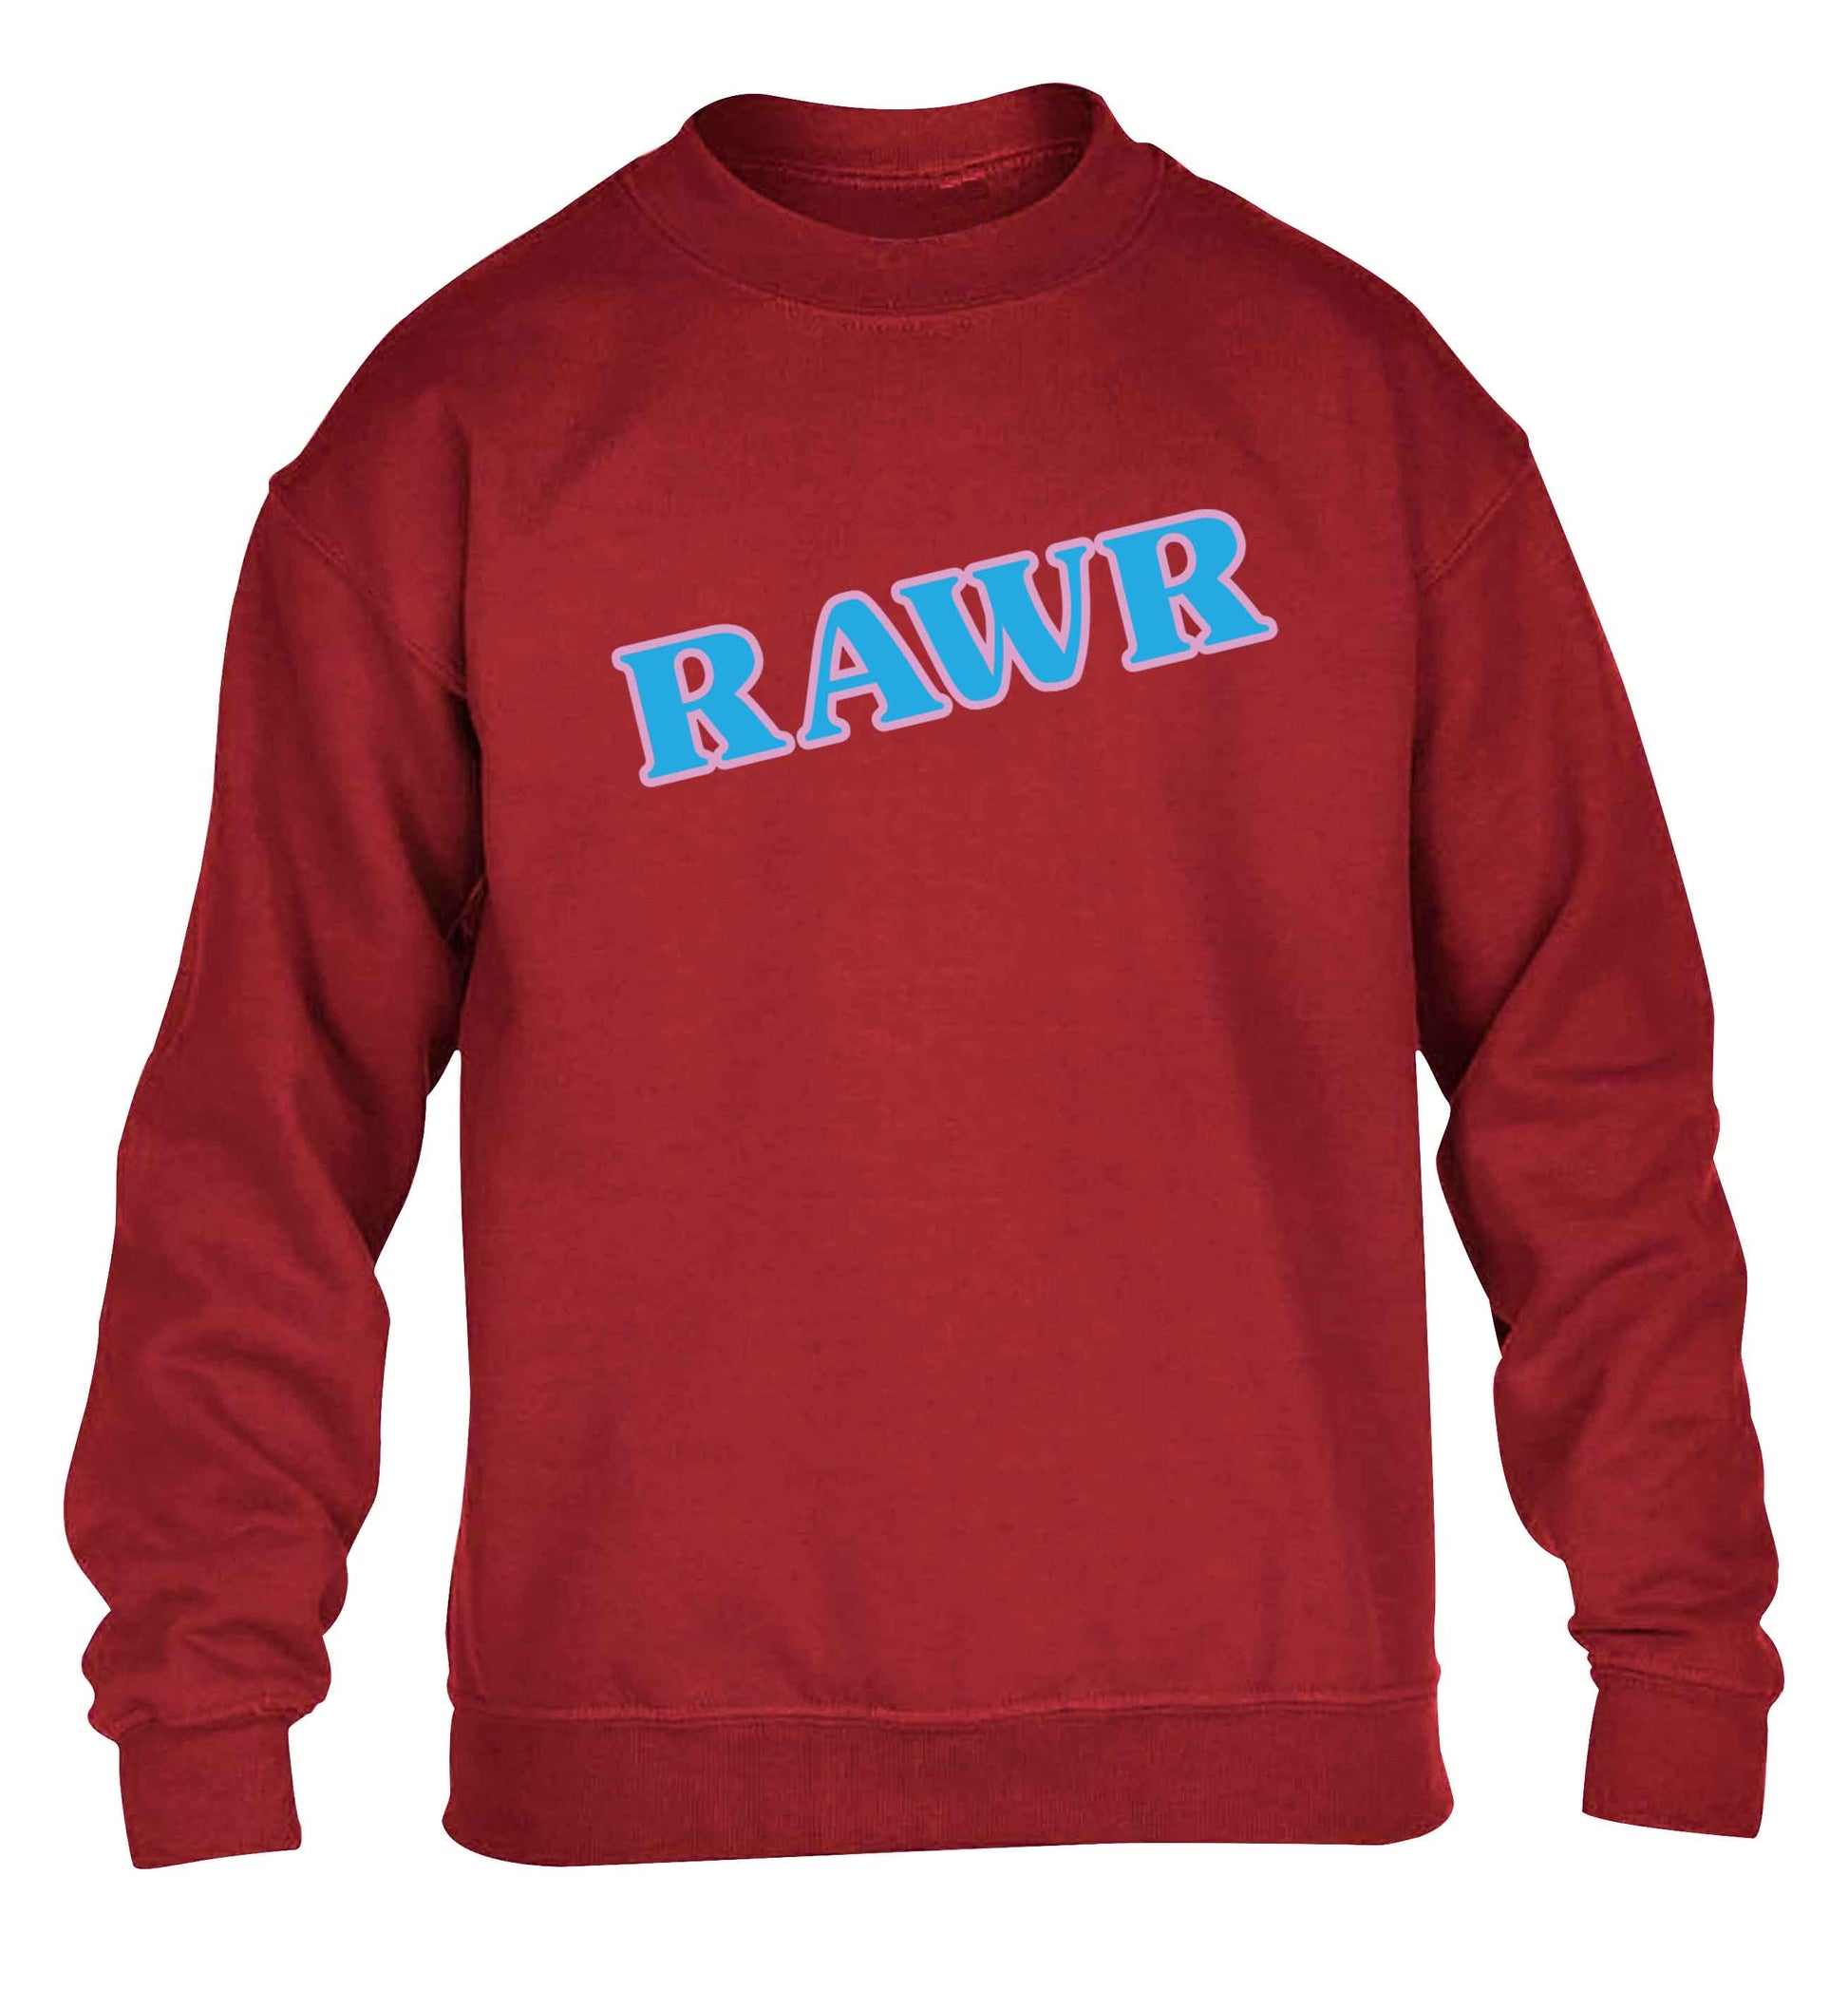 Rawr children's grey sweater 12-13 Years